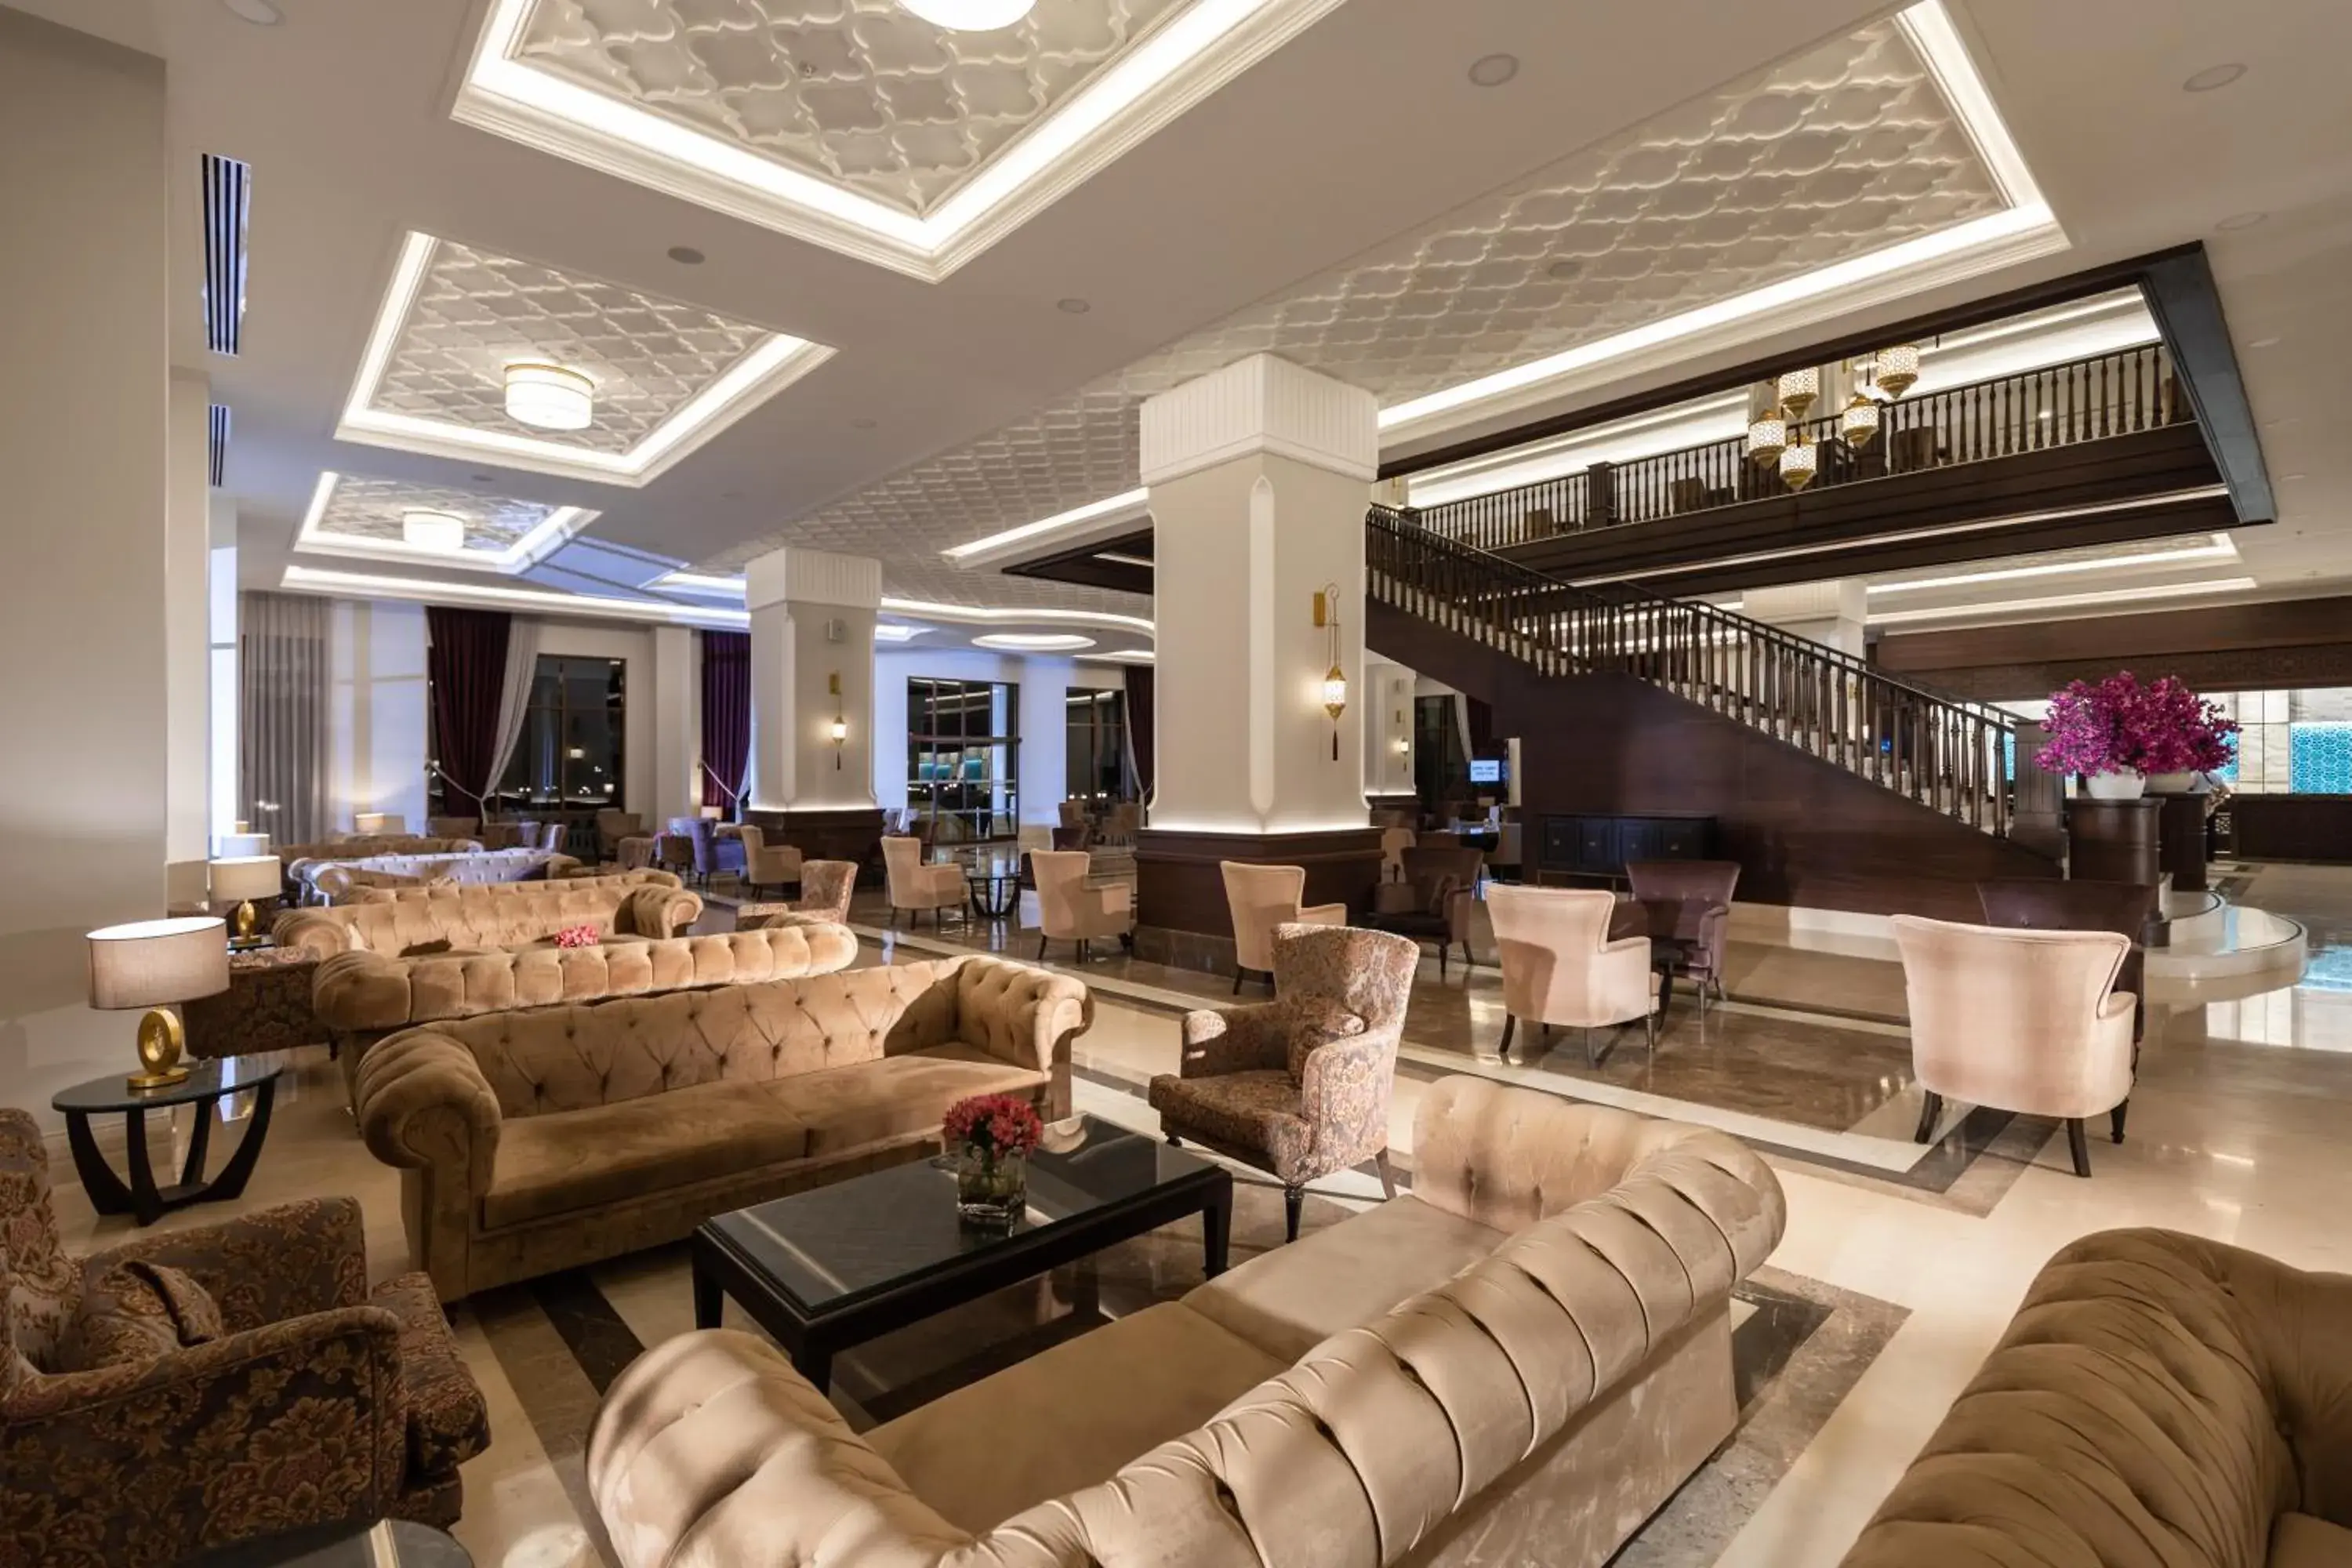 Lobby or reception in Swandor Hotels & Resorts - Topkapi Palace